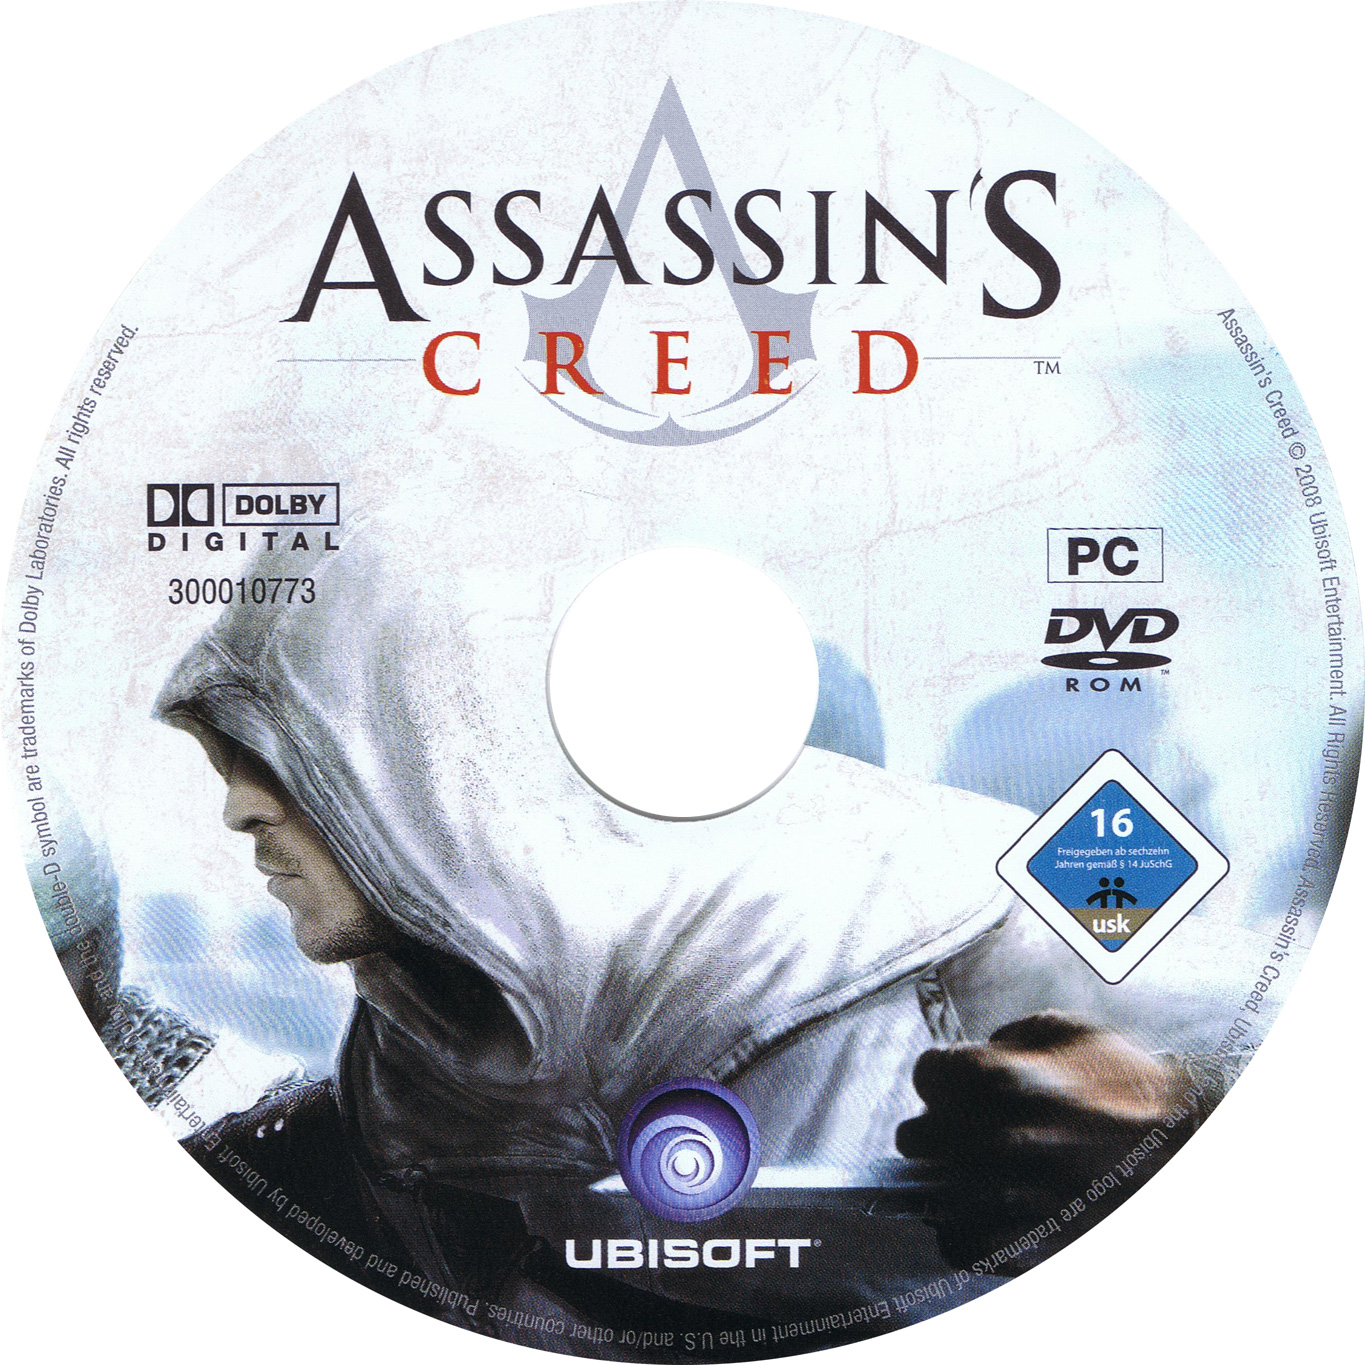 Assassins Creed - CD obal 3